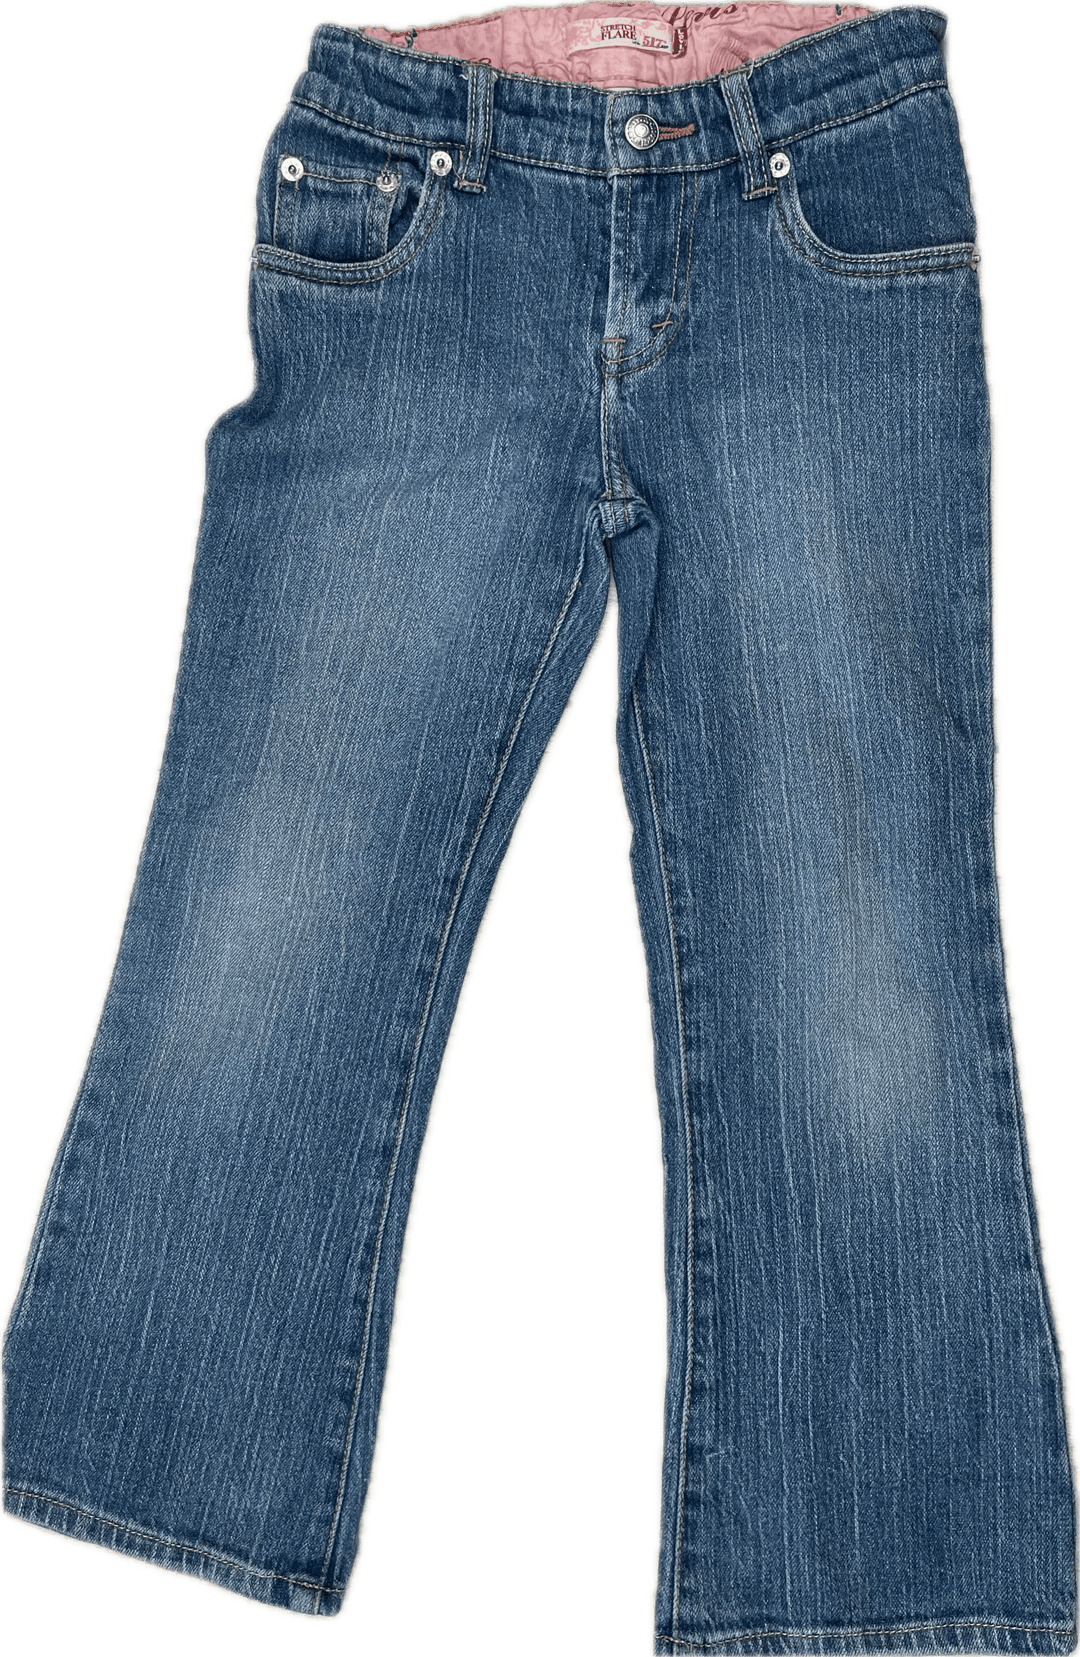 Levis 517 Flare Girls Stretch Jeans - Size 6X - Jean Pool